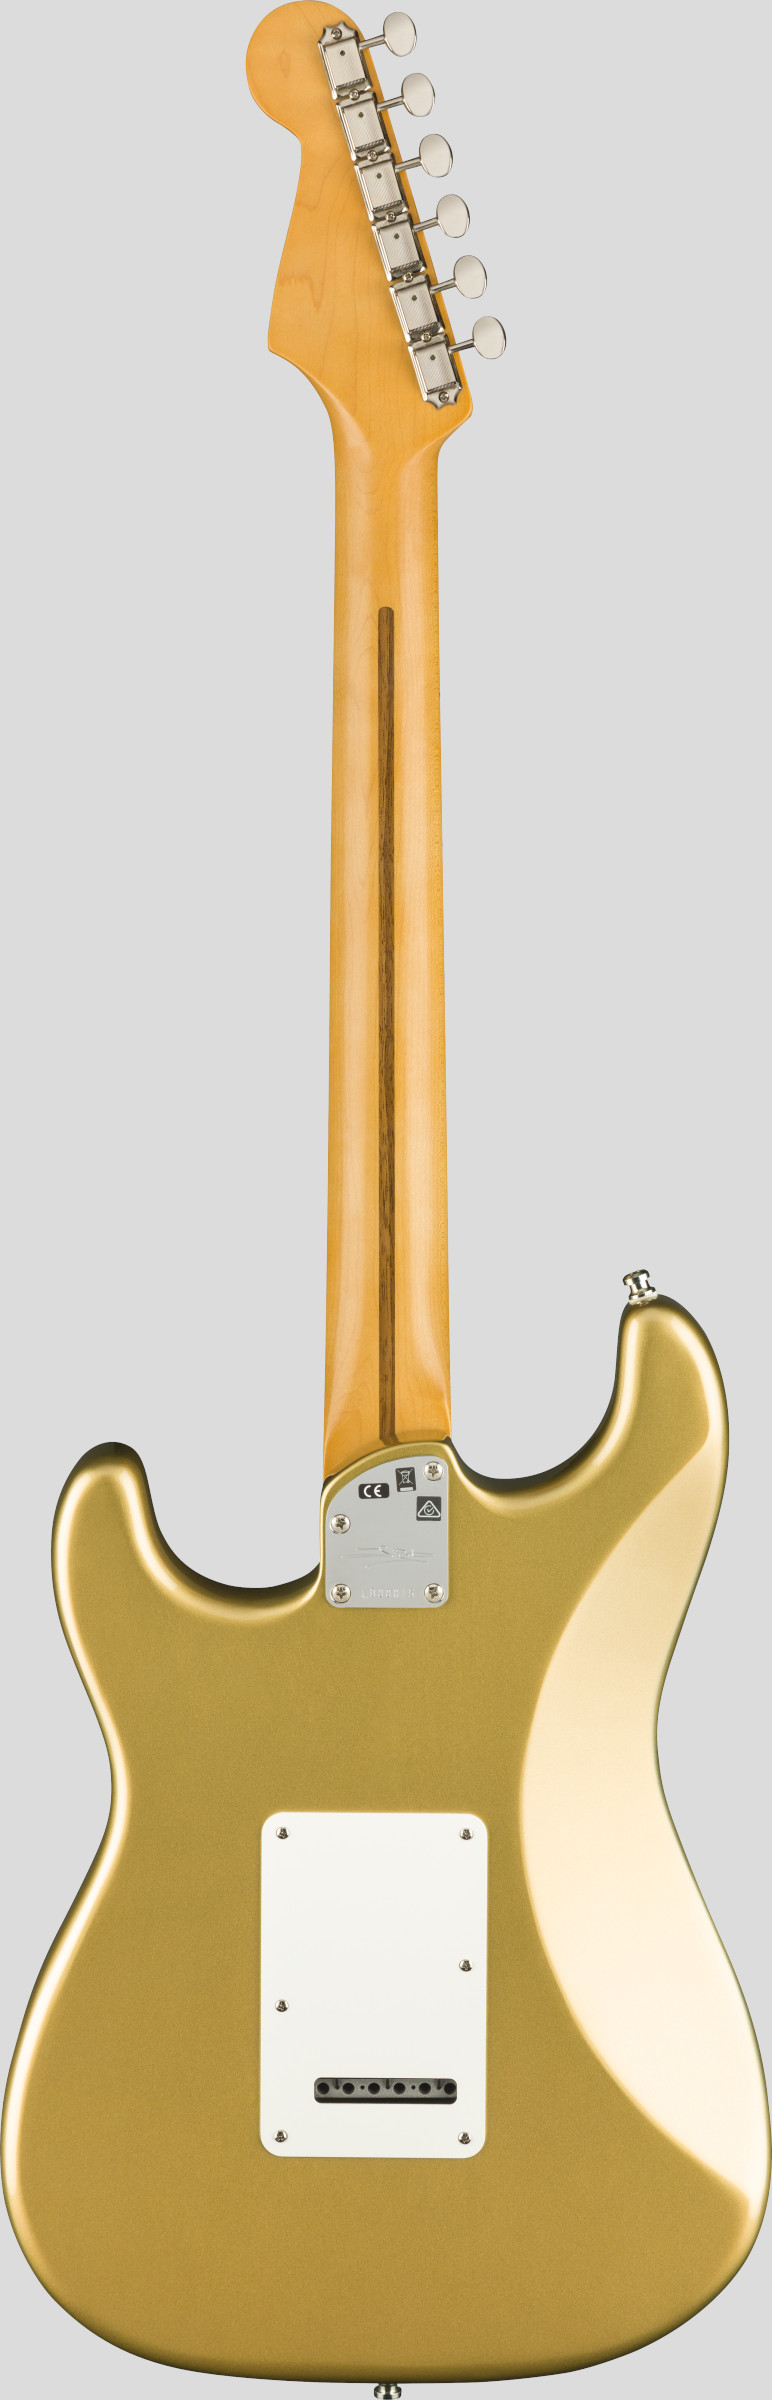 Fender Lincoln Brewster Stratocaster Aztec Gold 2